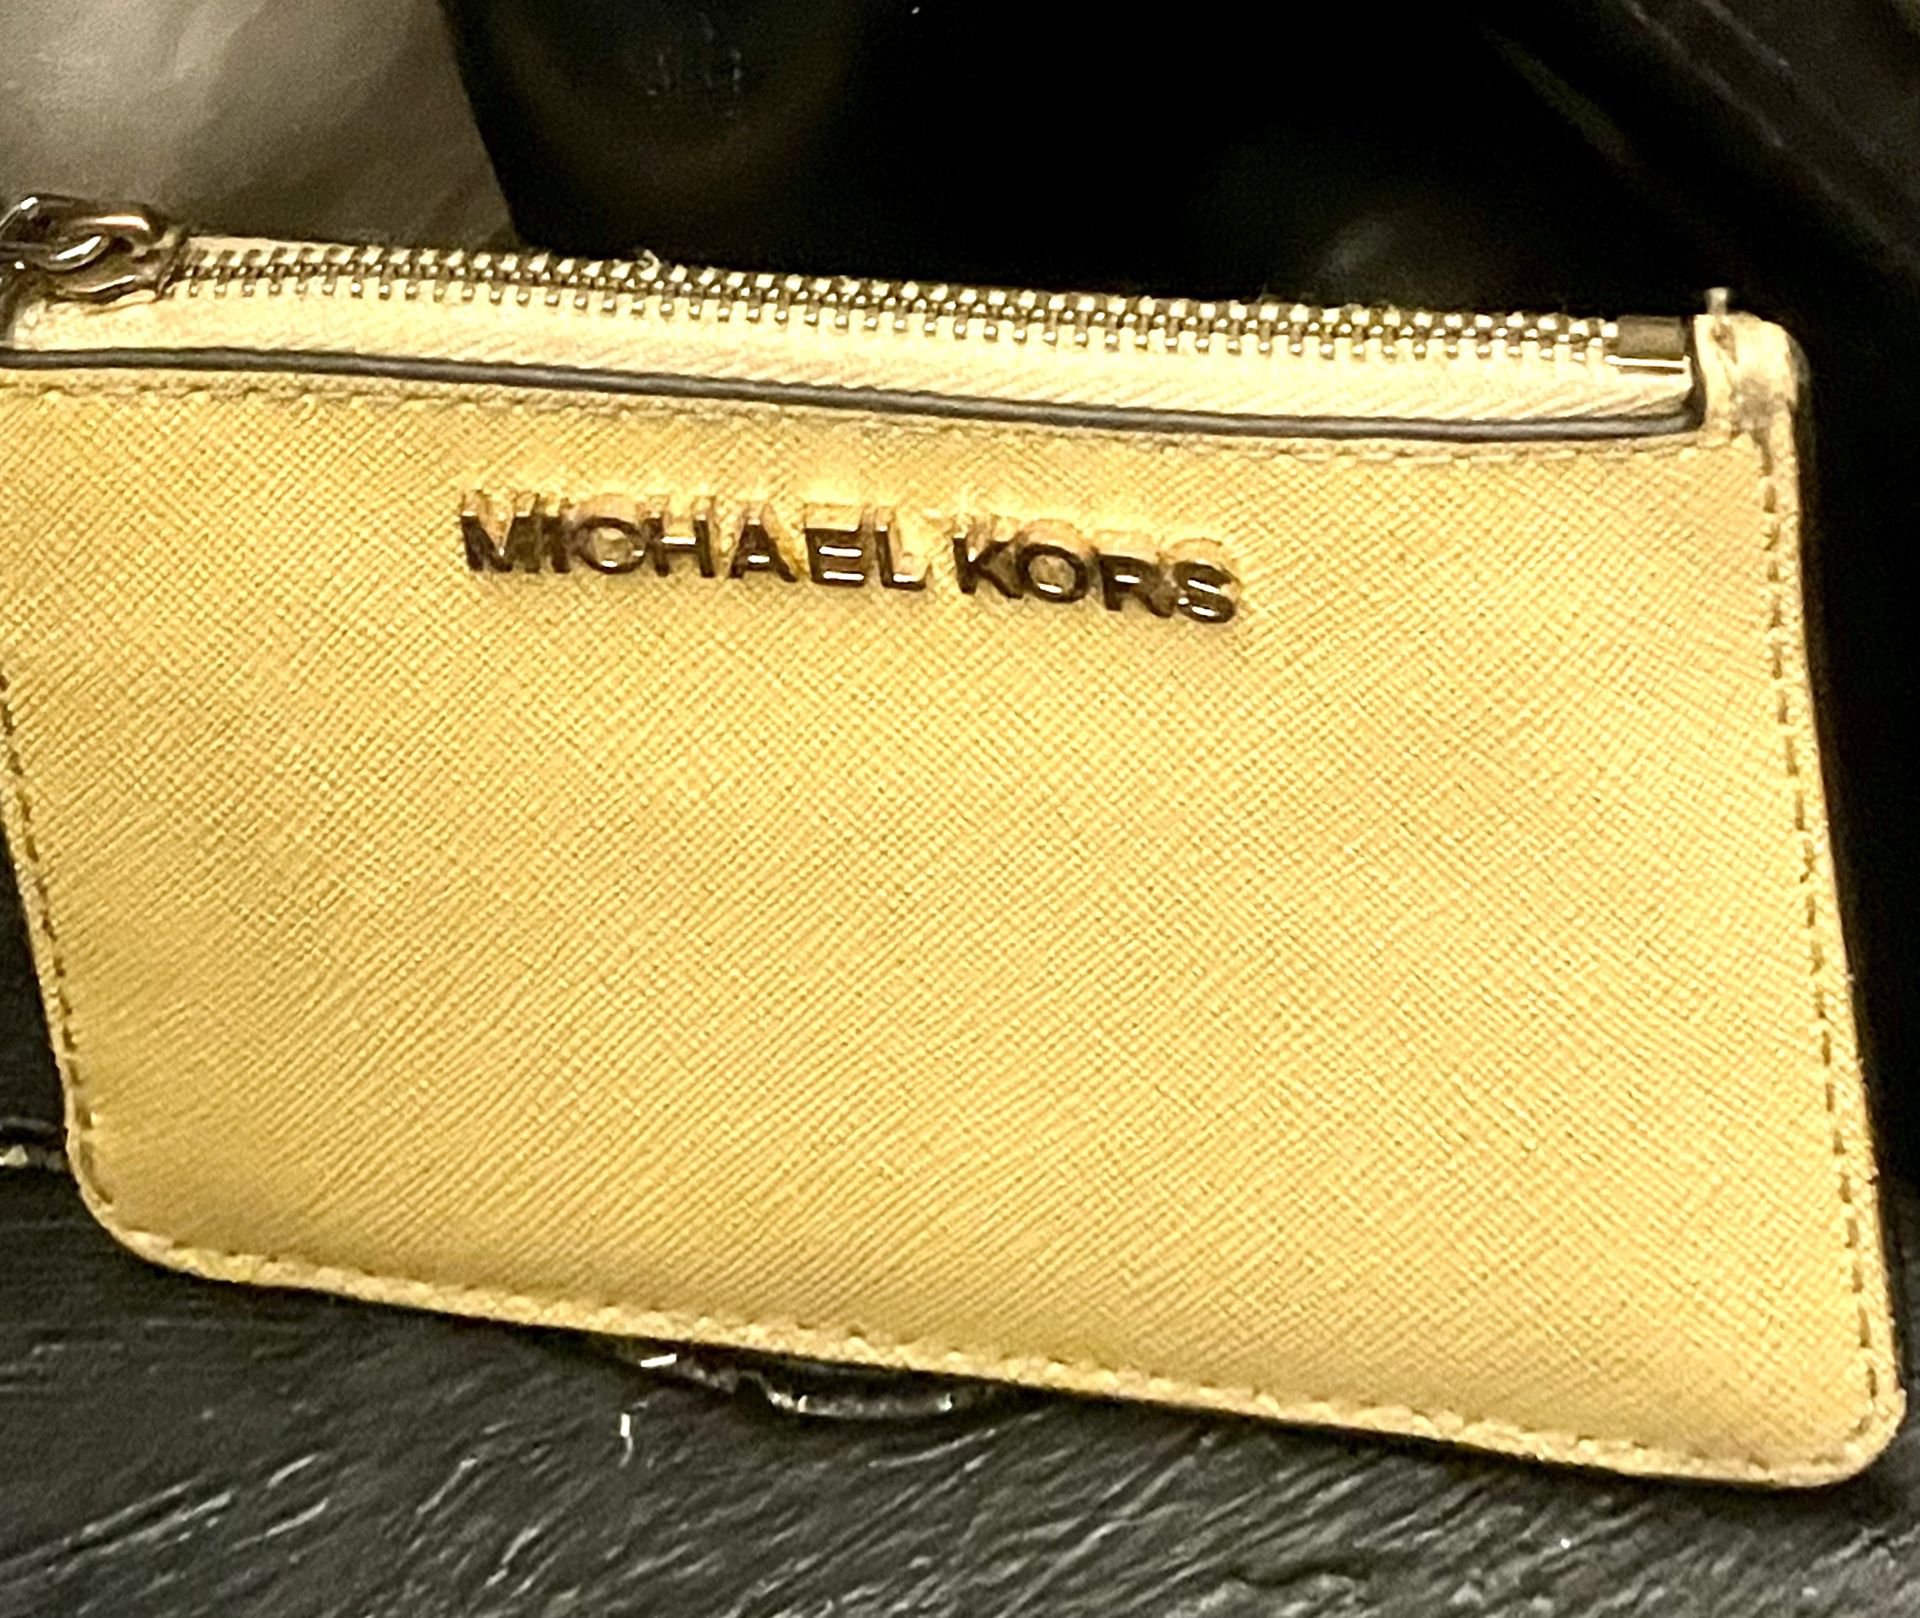 Handbags Wallets Michael Kors Yellows Women